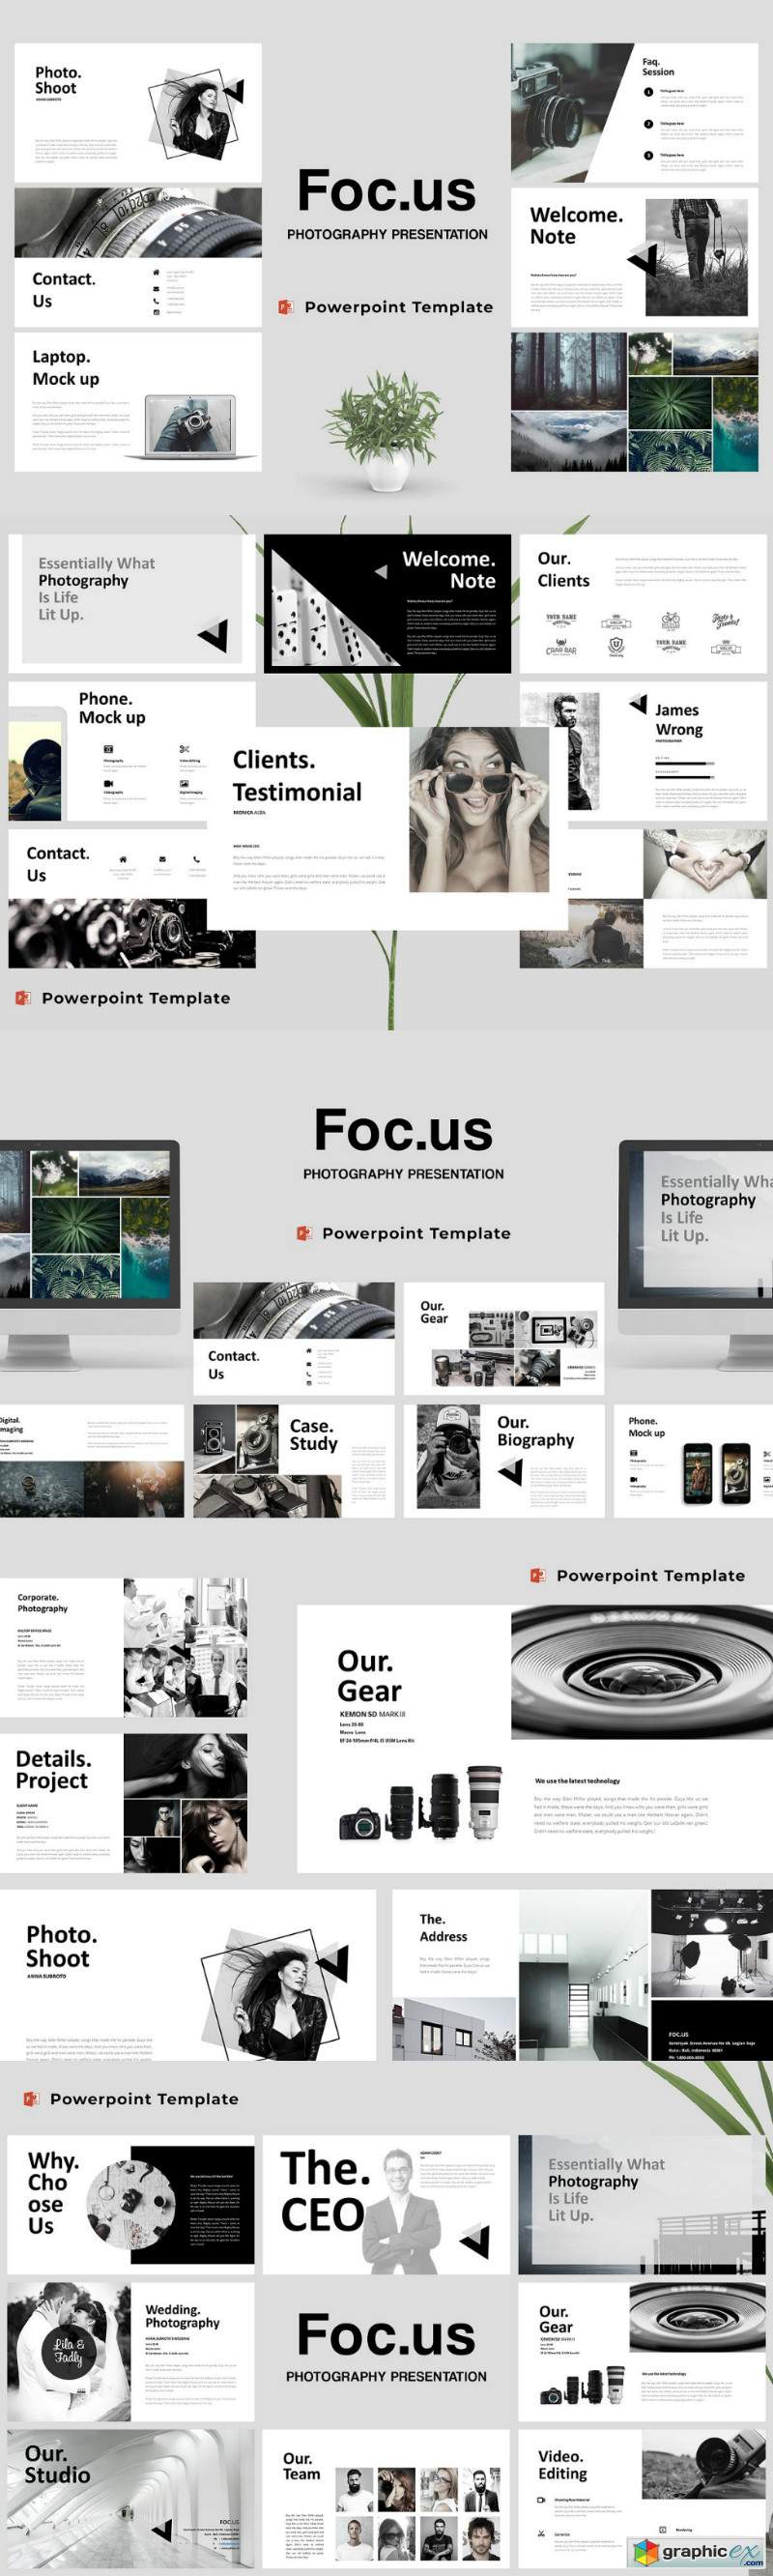 Focus - Powerpoint Template